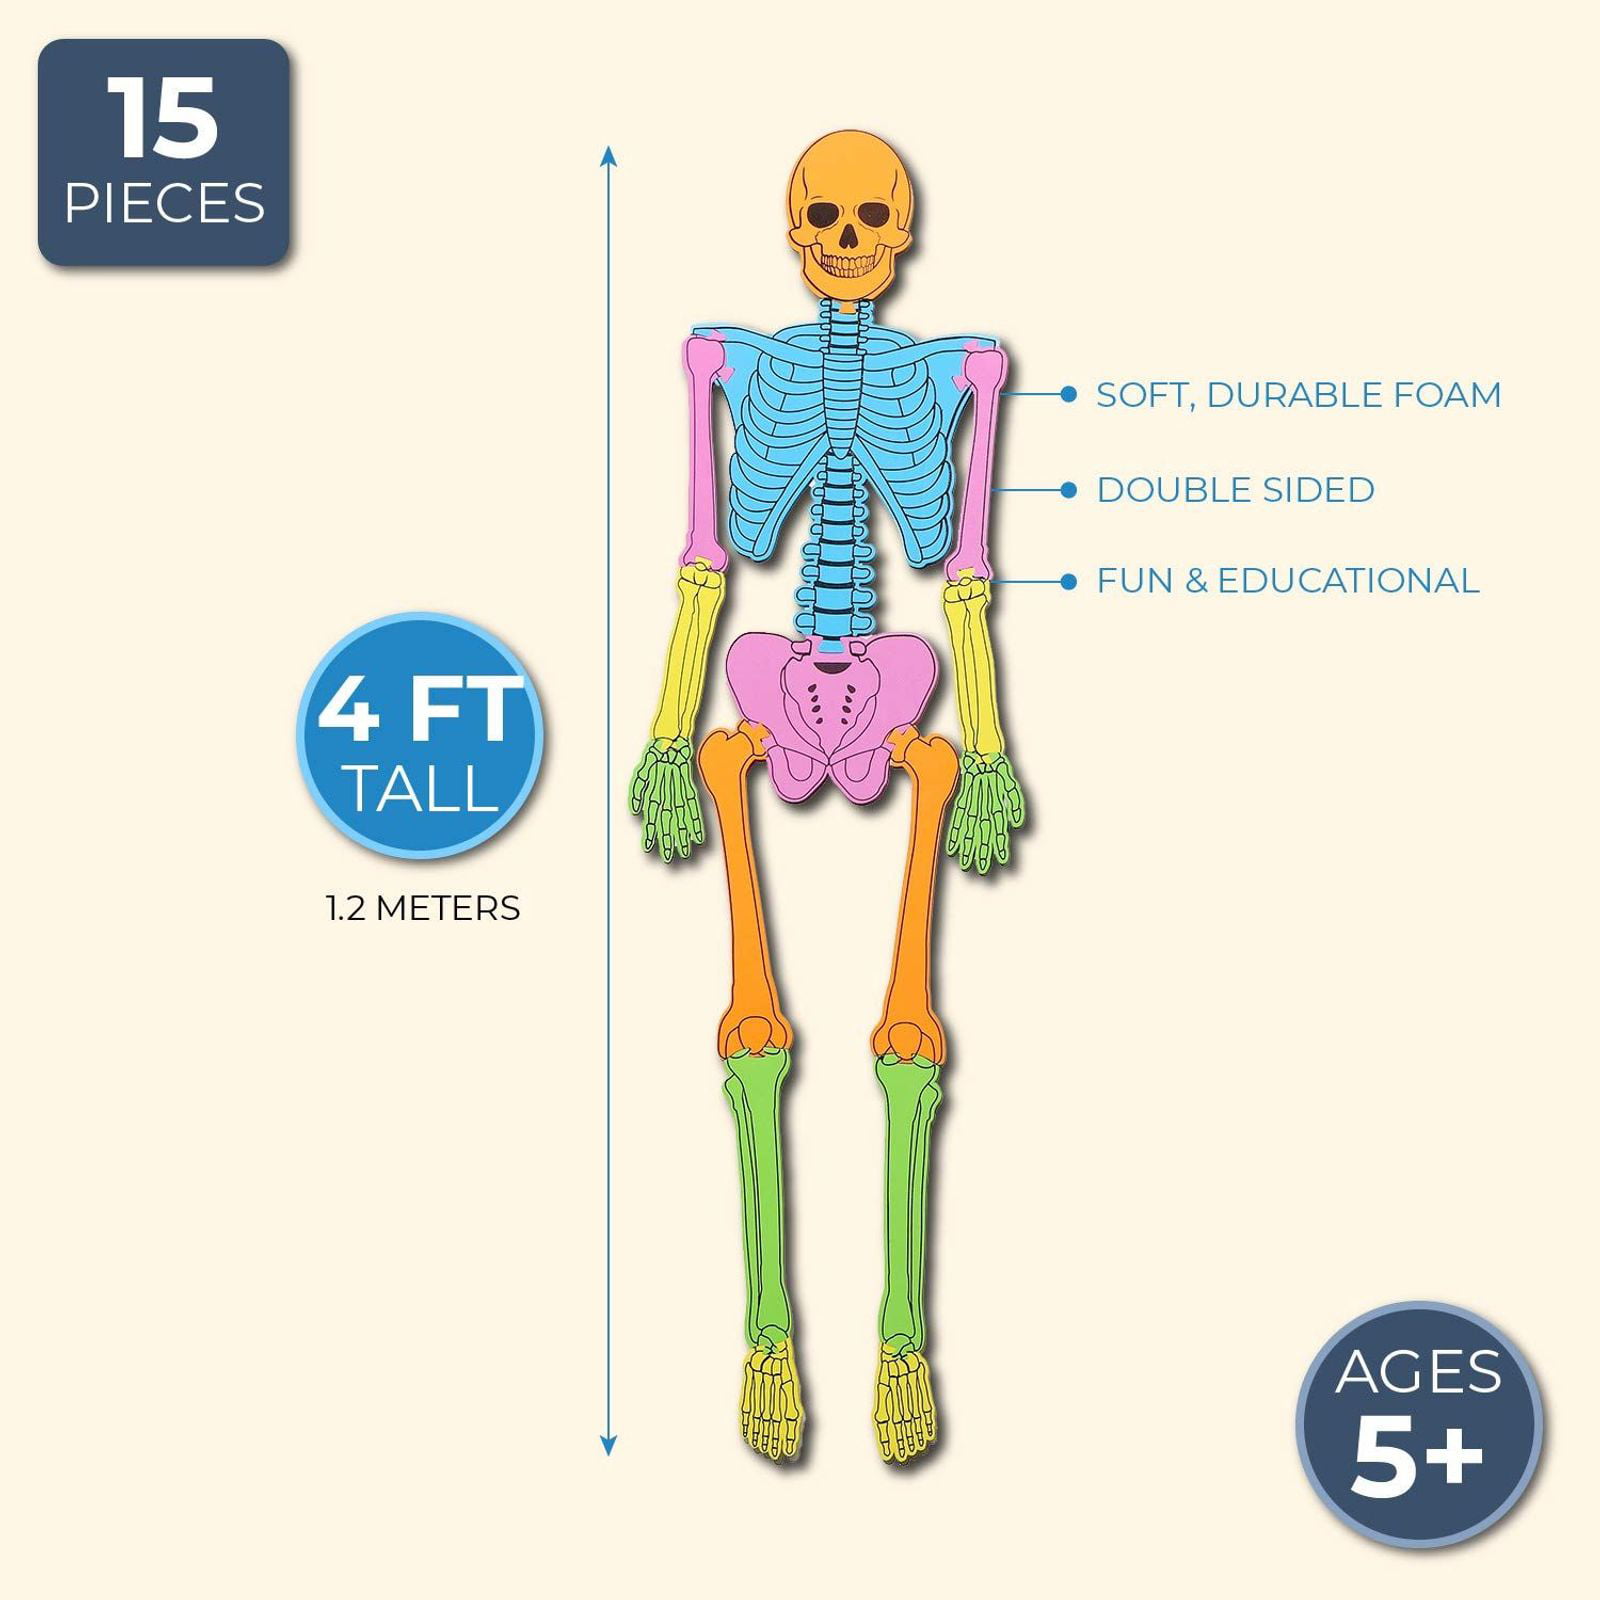 7 FOOT VINYL BONES PUZZLE Set Learning Activity Skeletal Therapy Skeleton School 